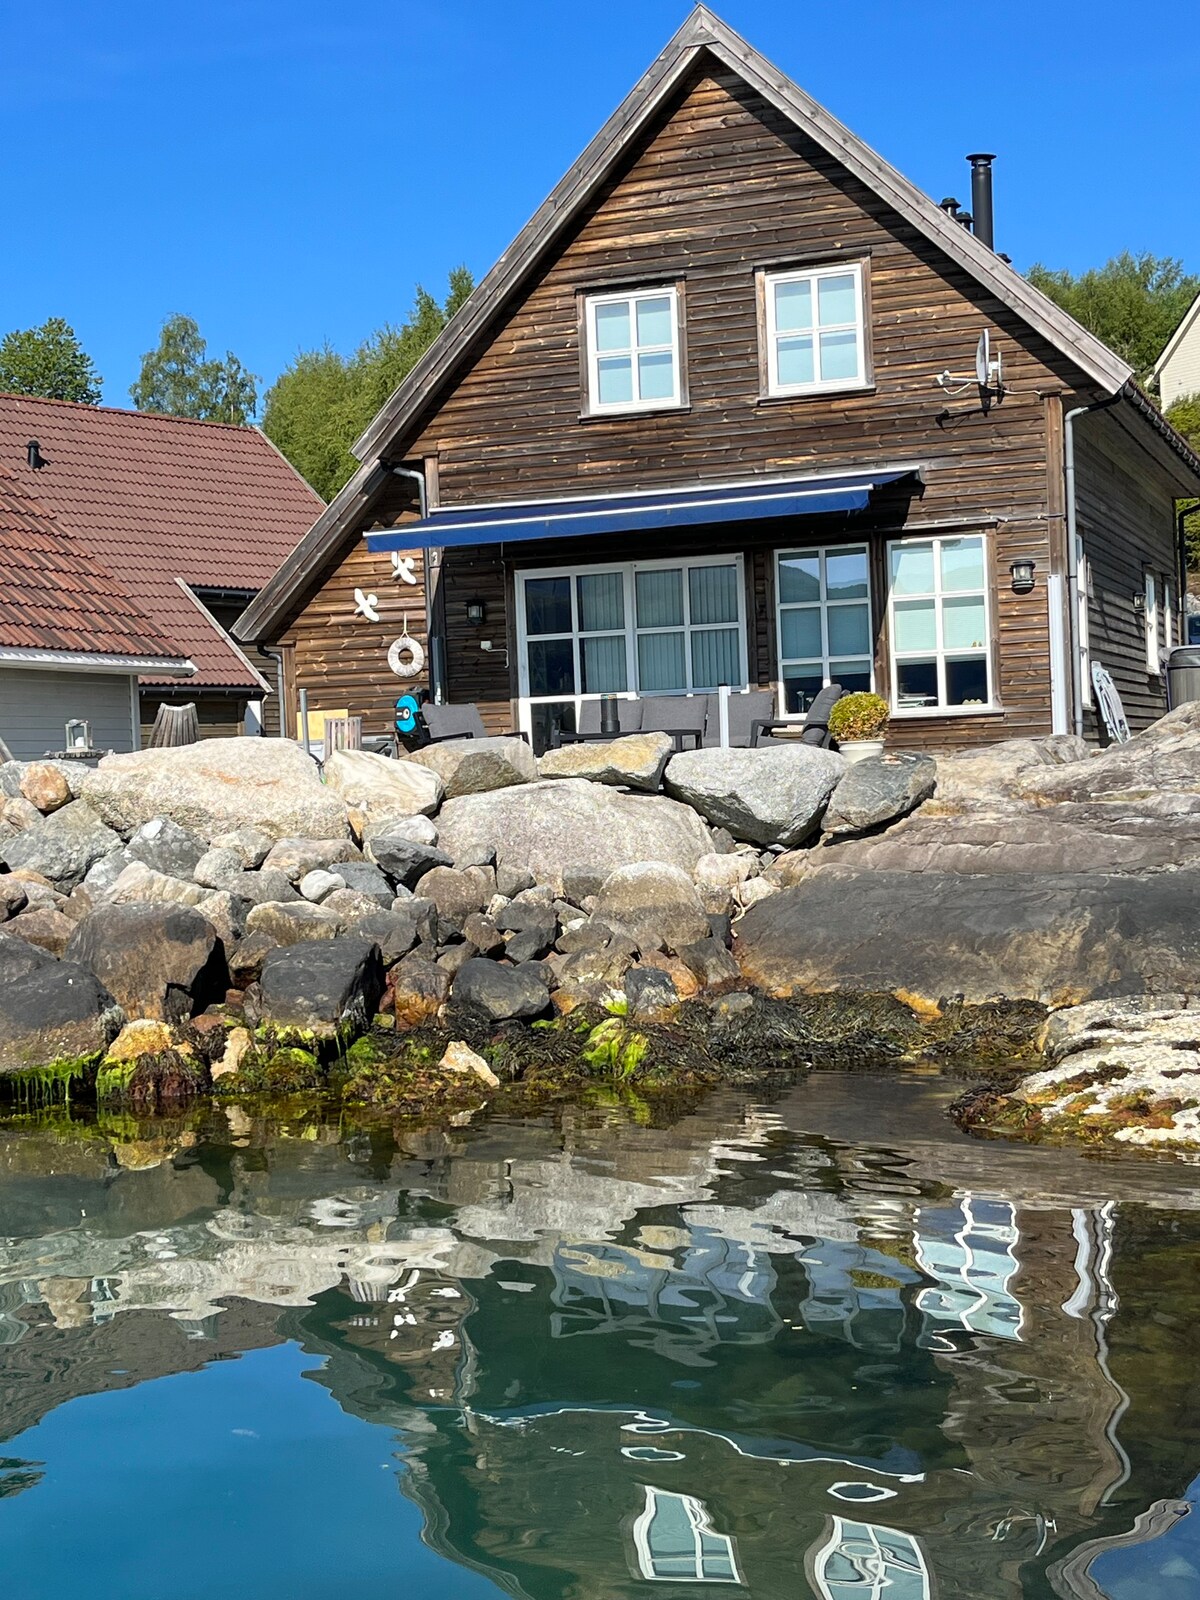 Kobbasteinen 51的Randøy湖边小屋。